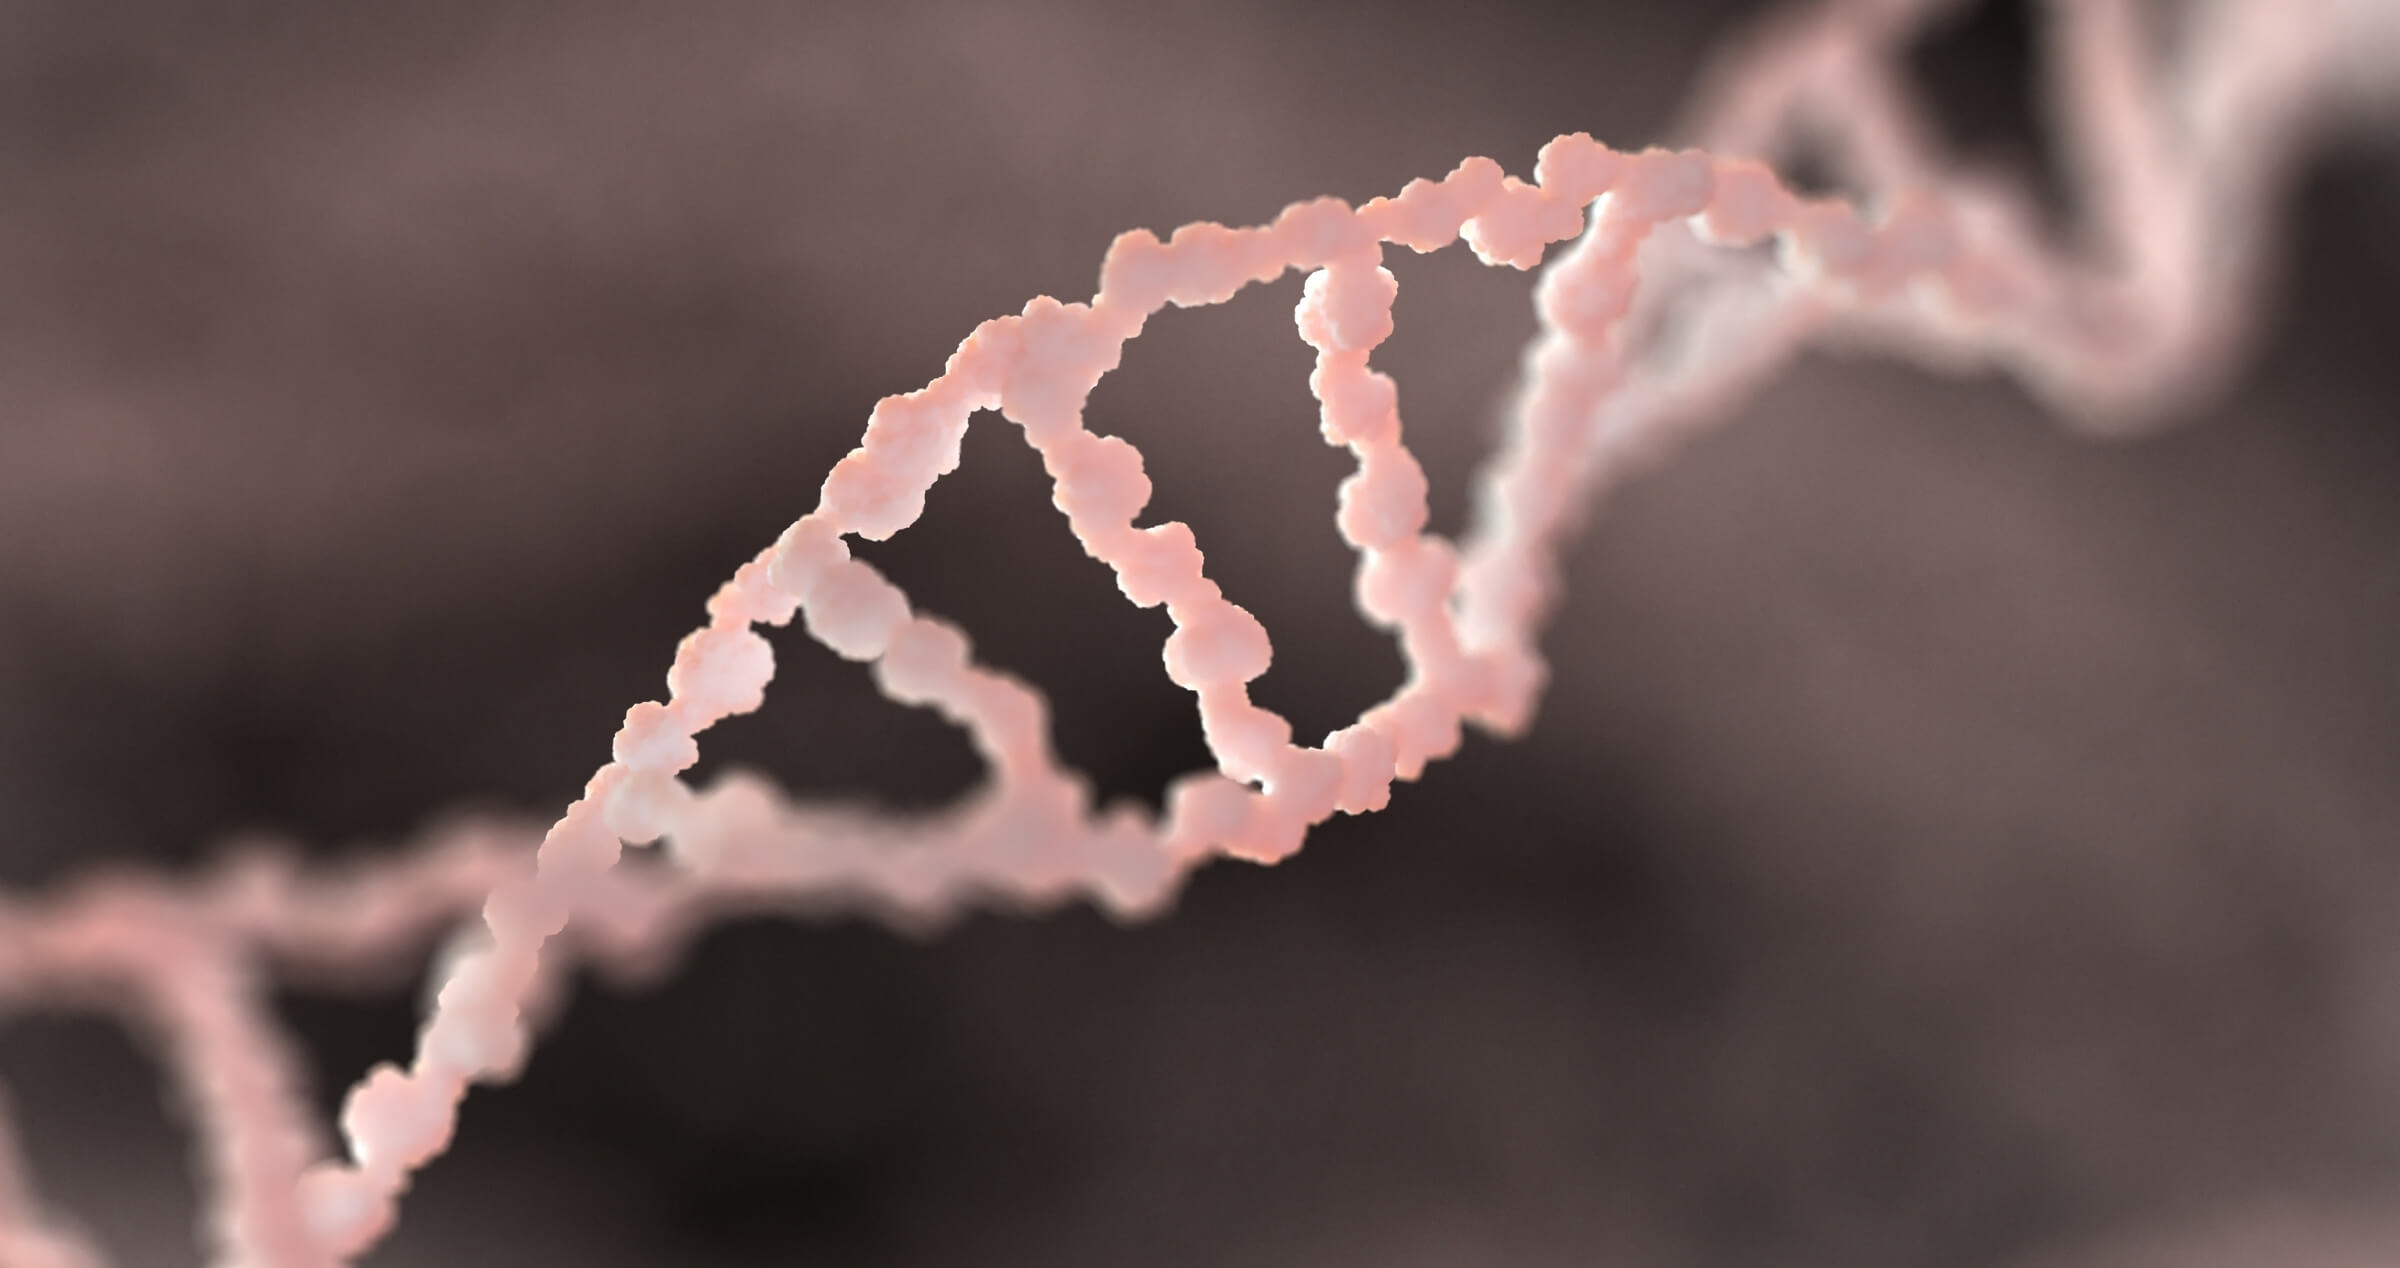 Image of DNA double helix